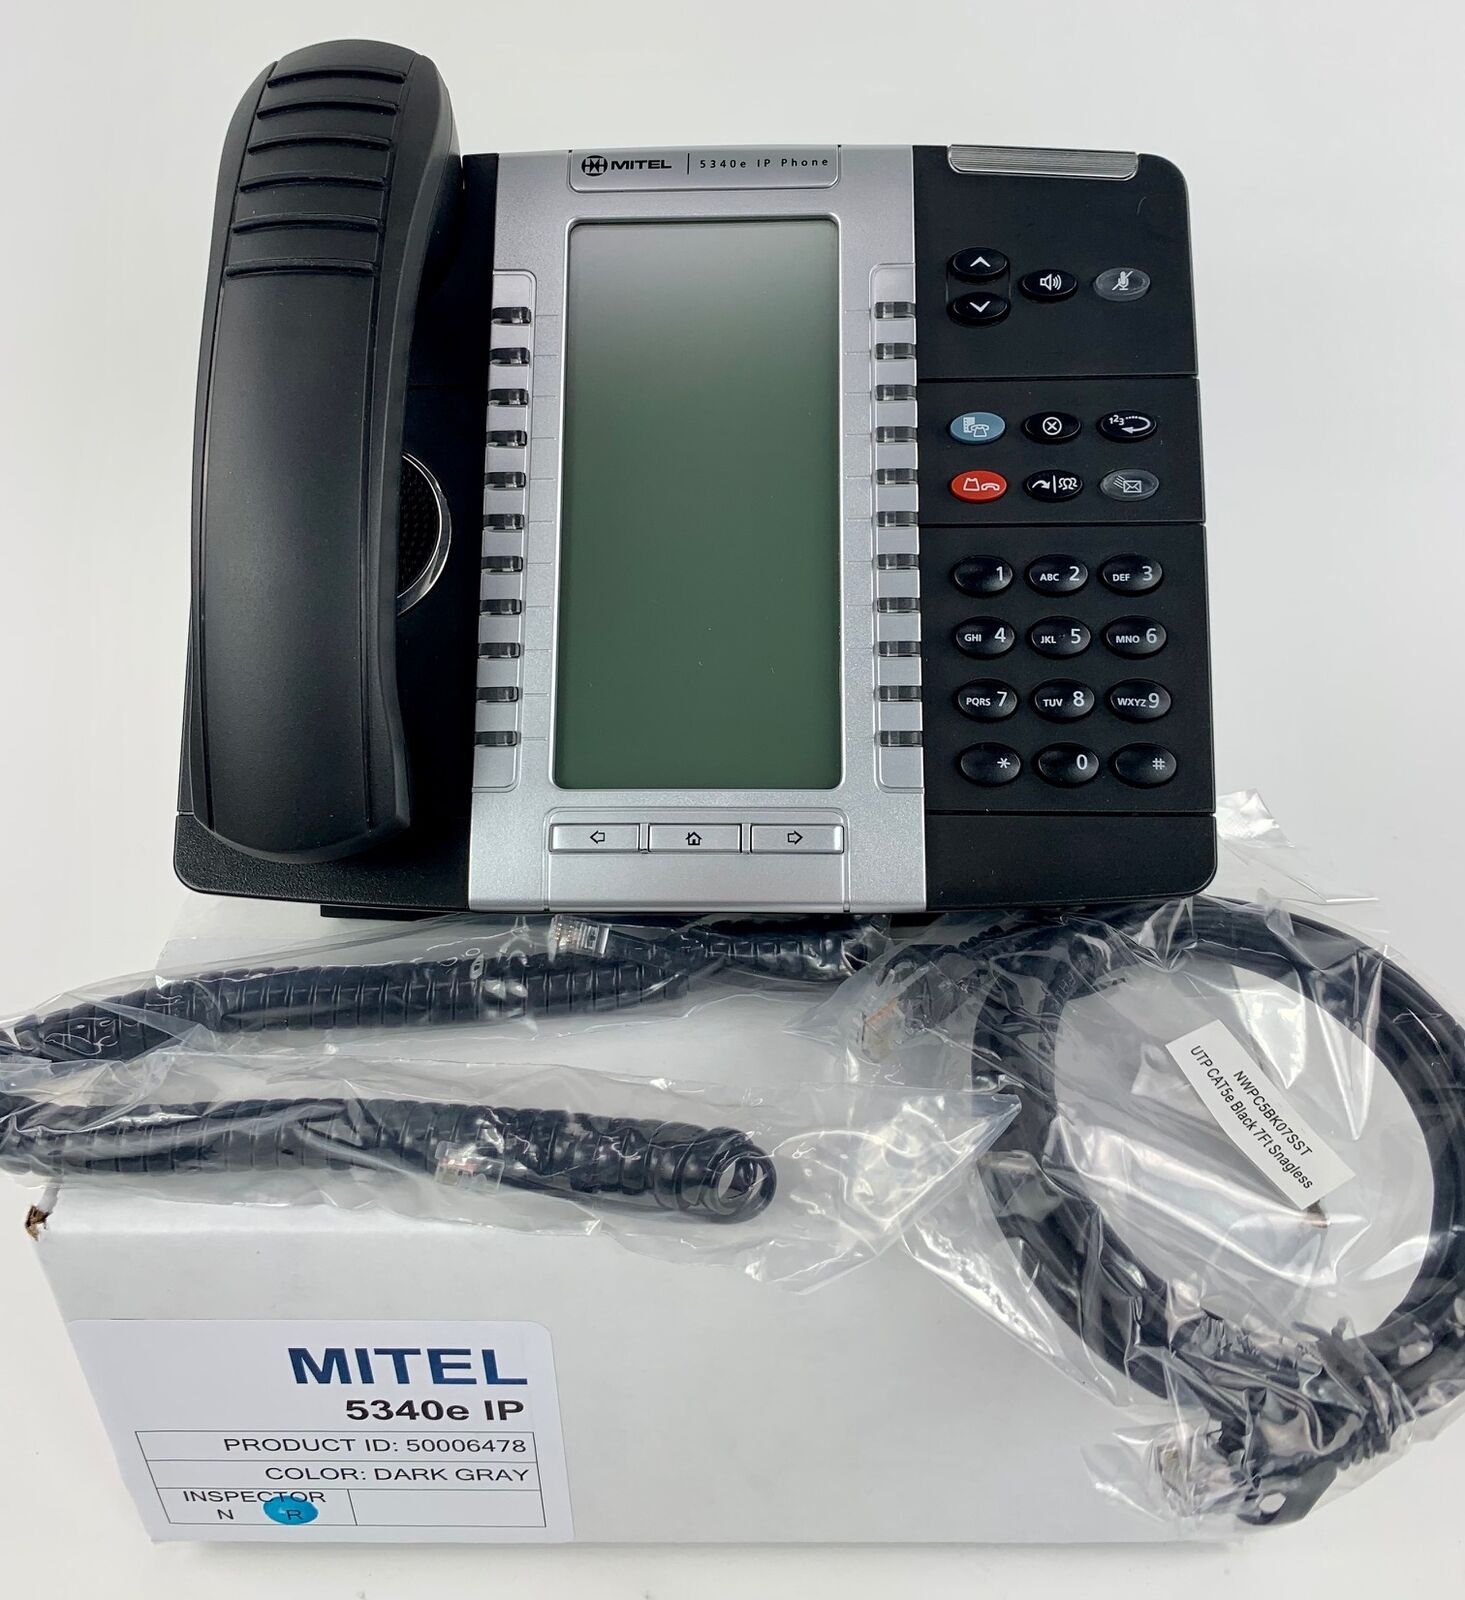 Mitel MiVoice 5340e IP Phone (50006478)  - Bulk